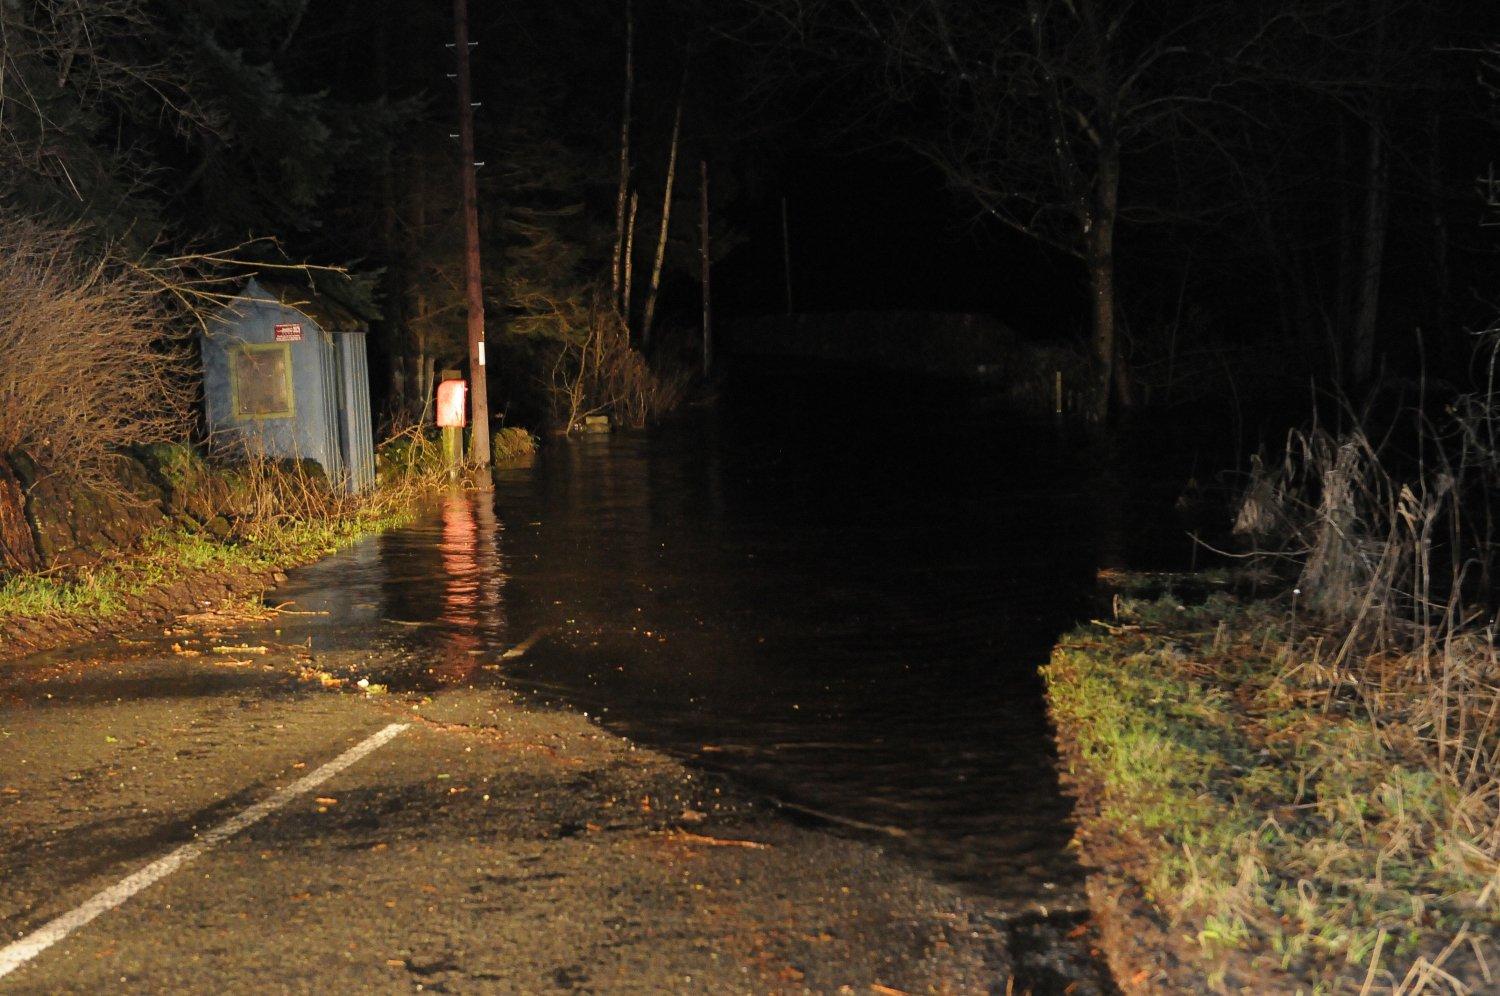 The Ettrick Water burst its banks on Saturday night near Collins Bridge.